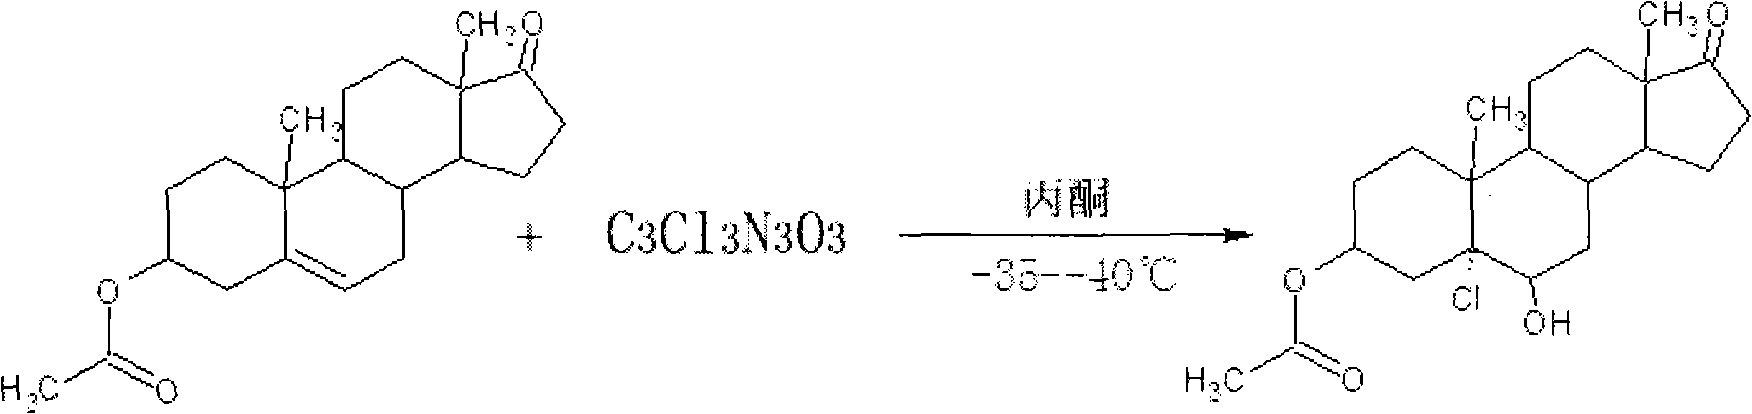 Preparation method of 19-nor-4-androstenedione